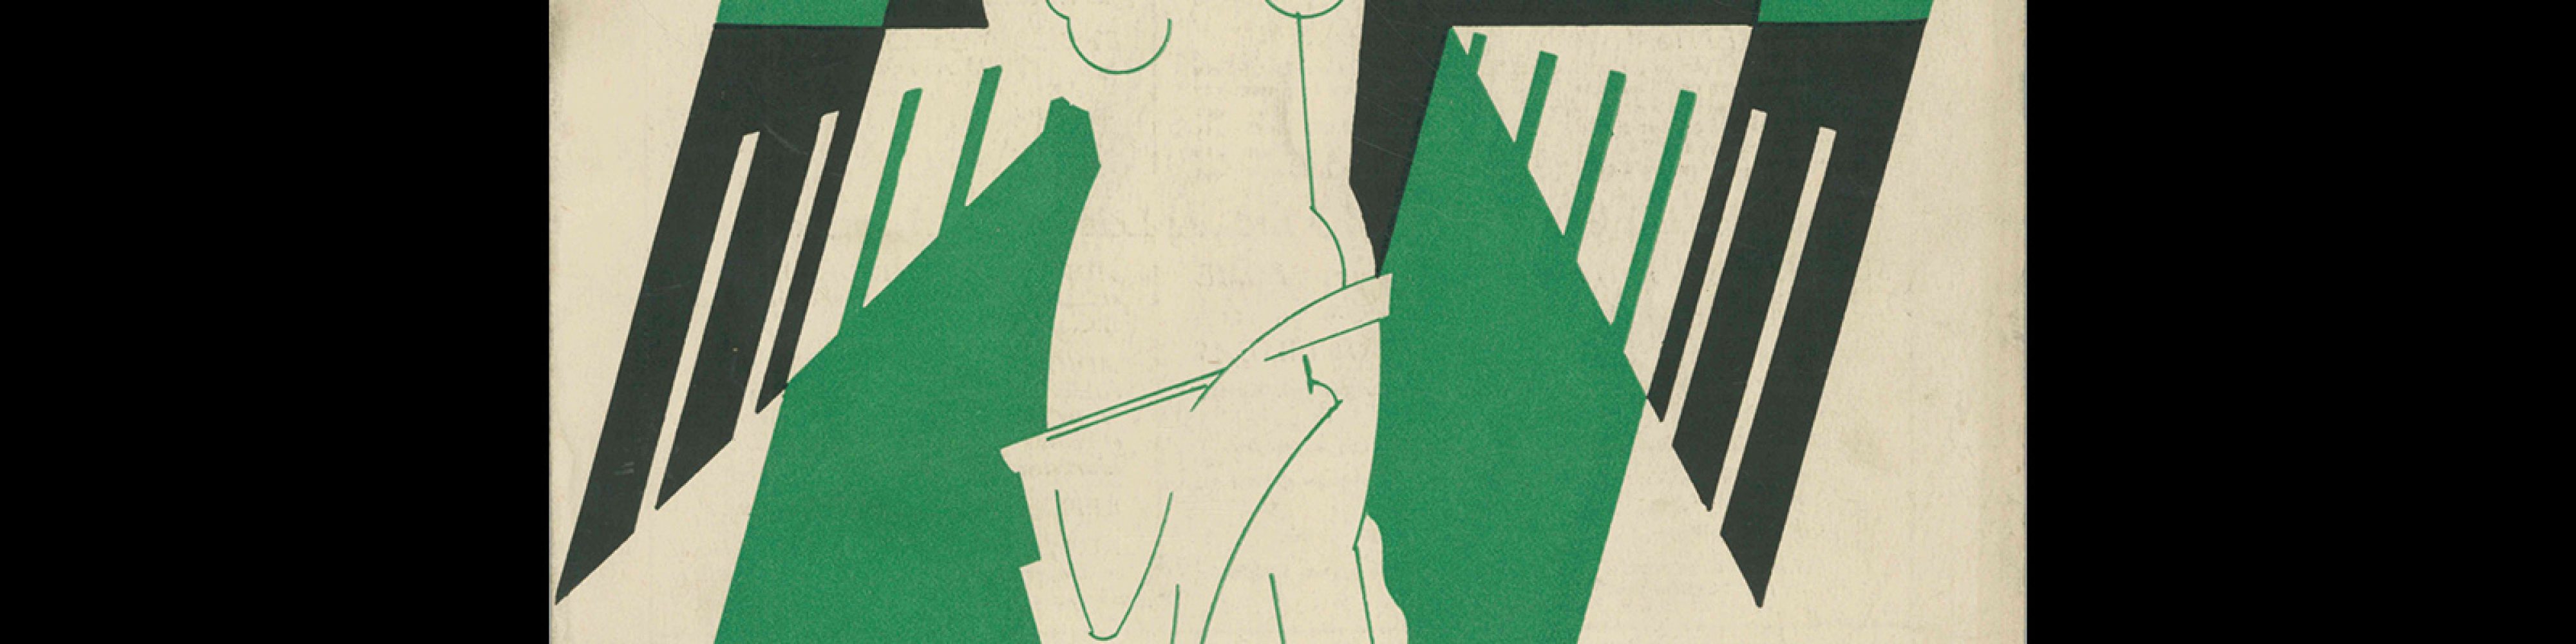 The Studio, Vol 97, June 1929. Cover design by Edward McKnight Kauffer